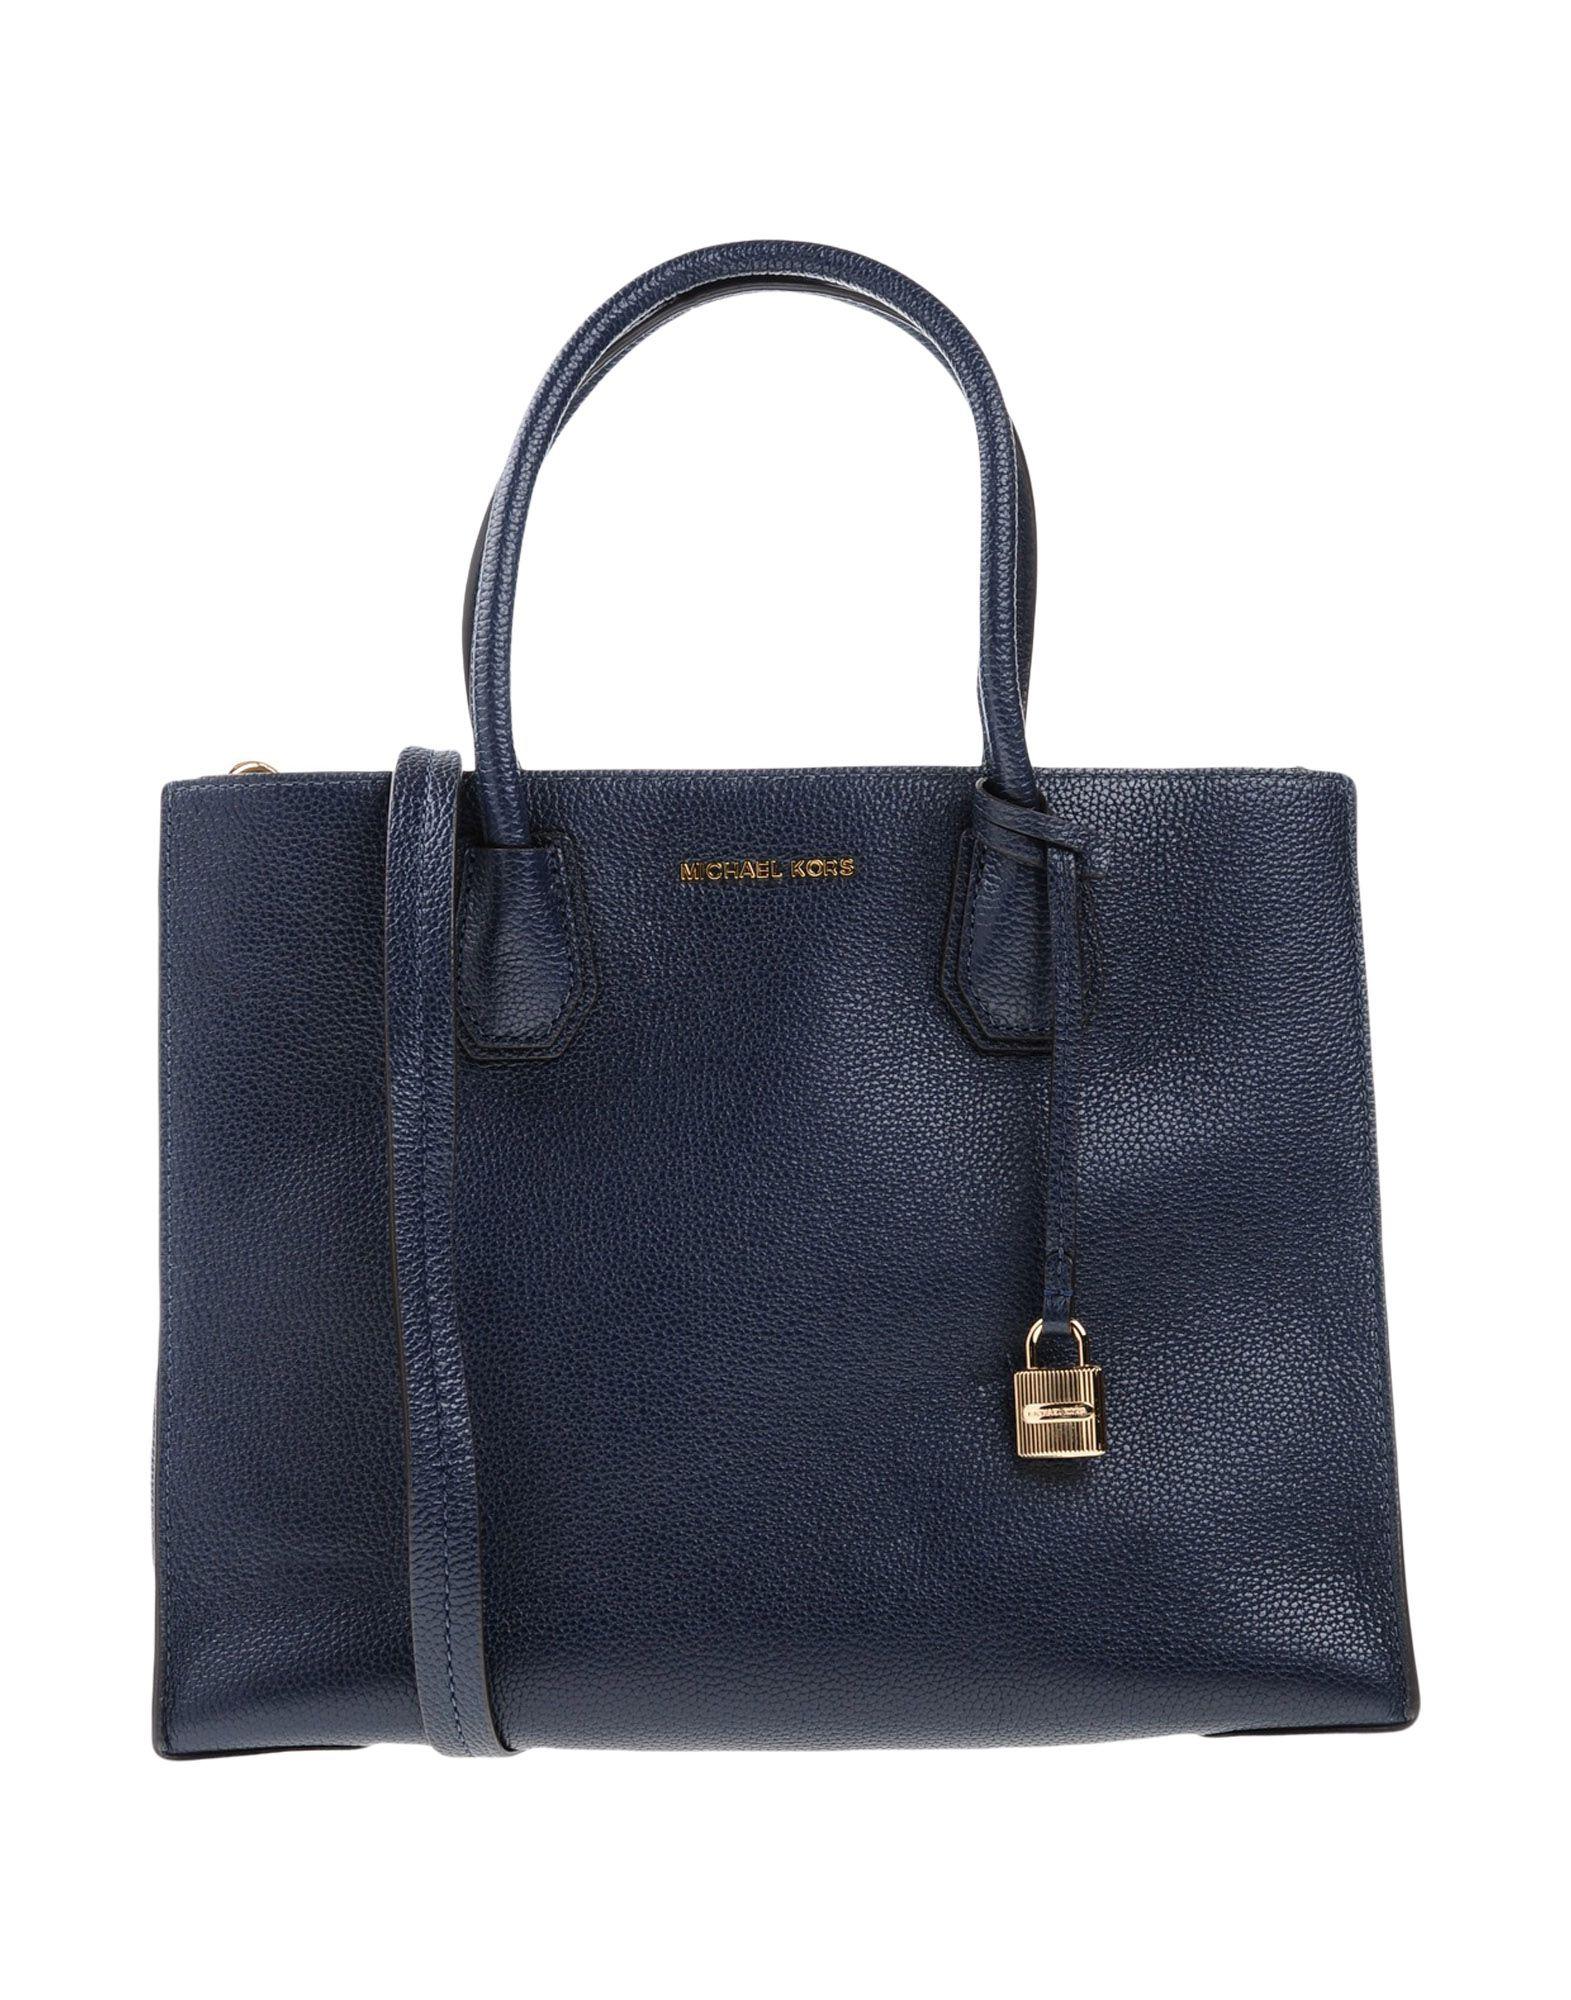 MICHAEL Michael Kors Leather Handbag in Dark Blue (Blue) - Save 41% - Lyst